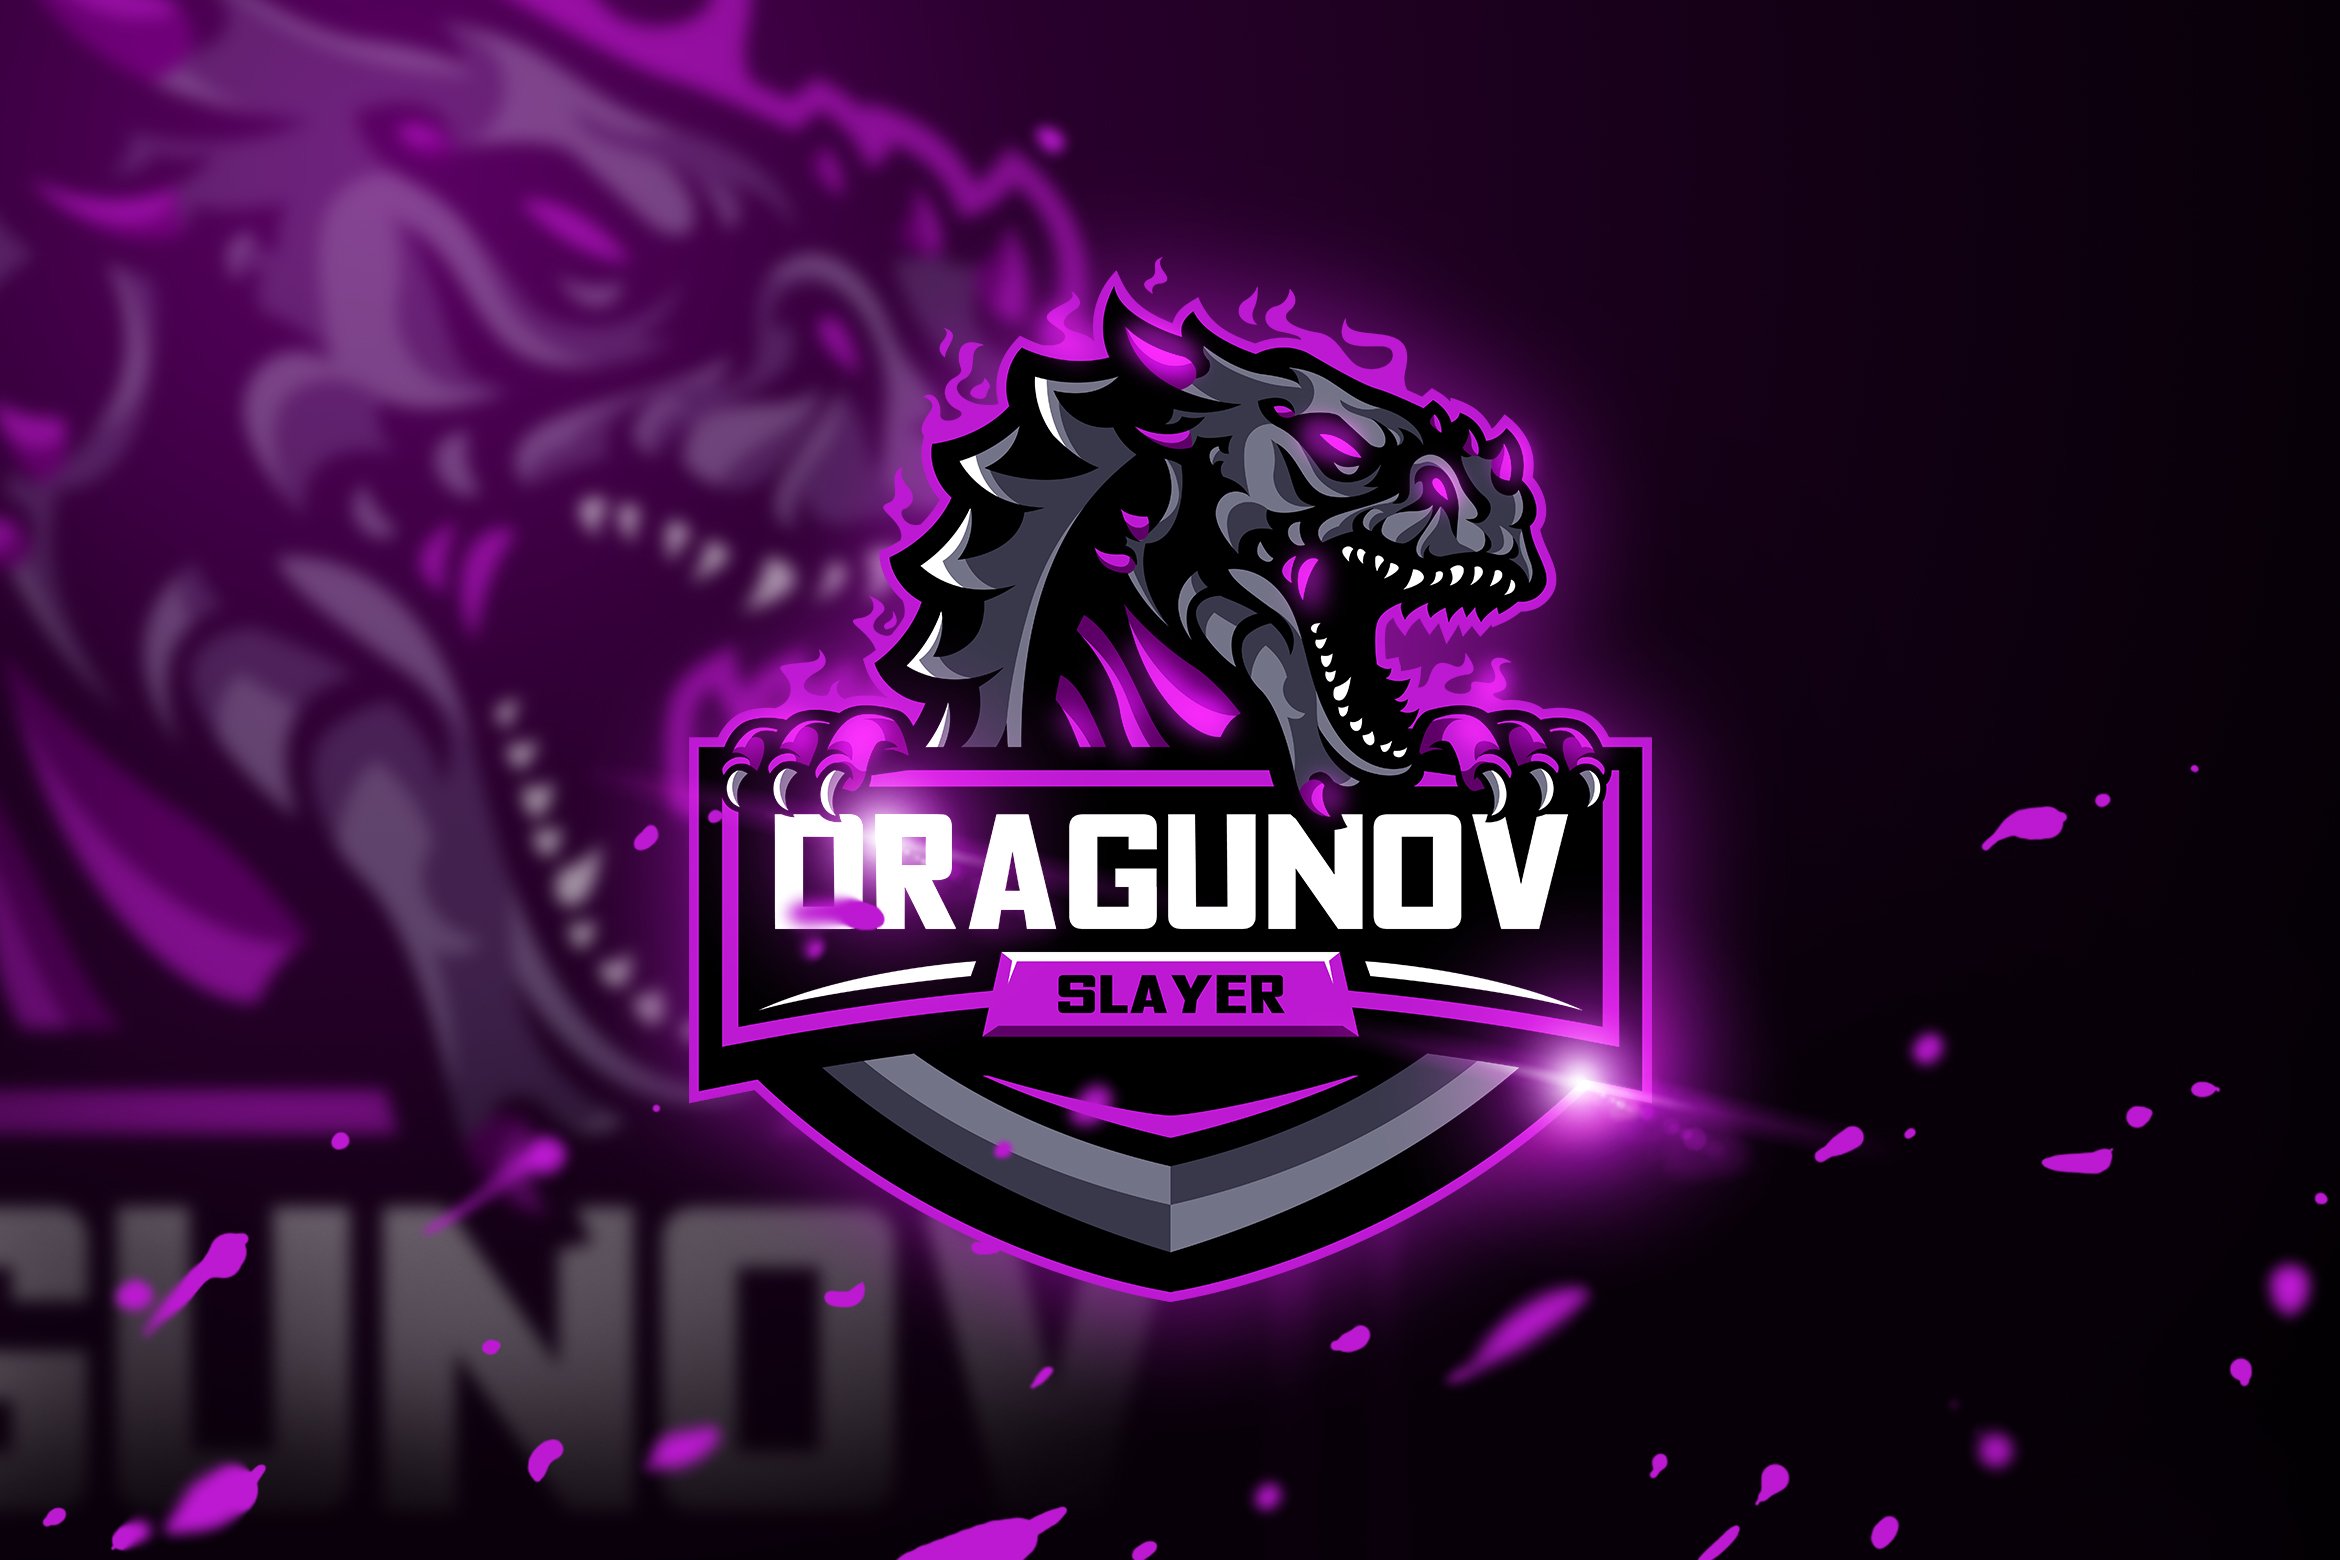 Dragunov Slayer-Mascot & Esport Logo cover image.